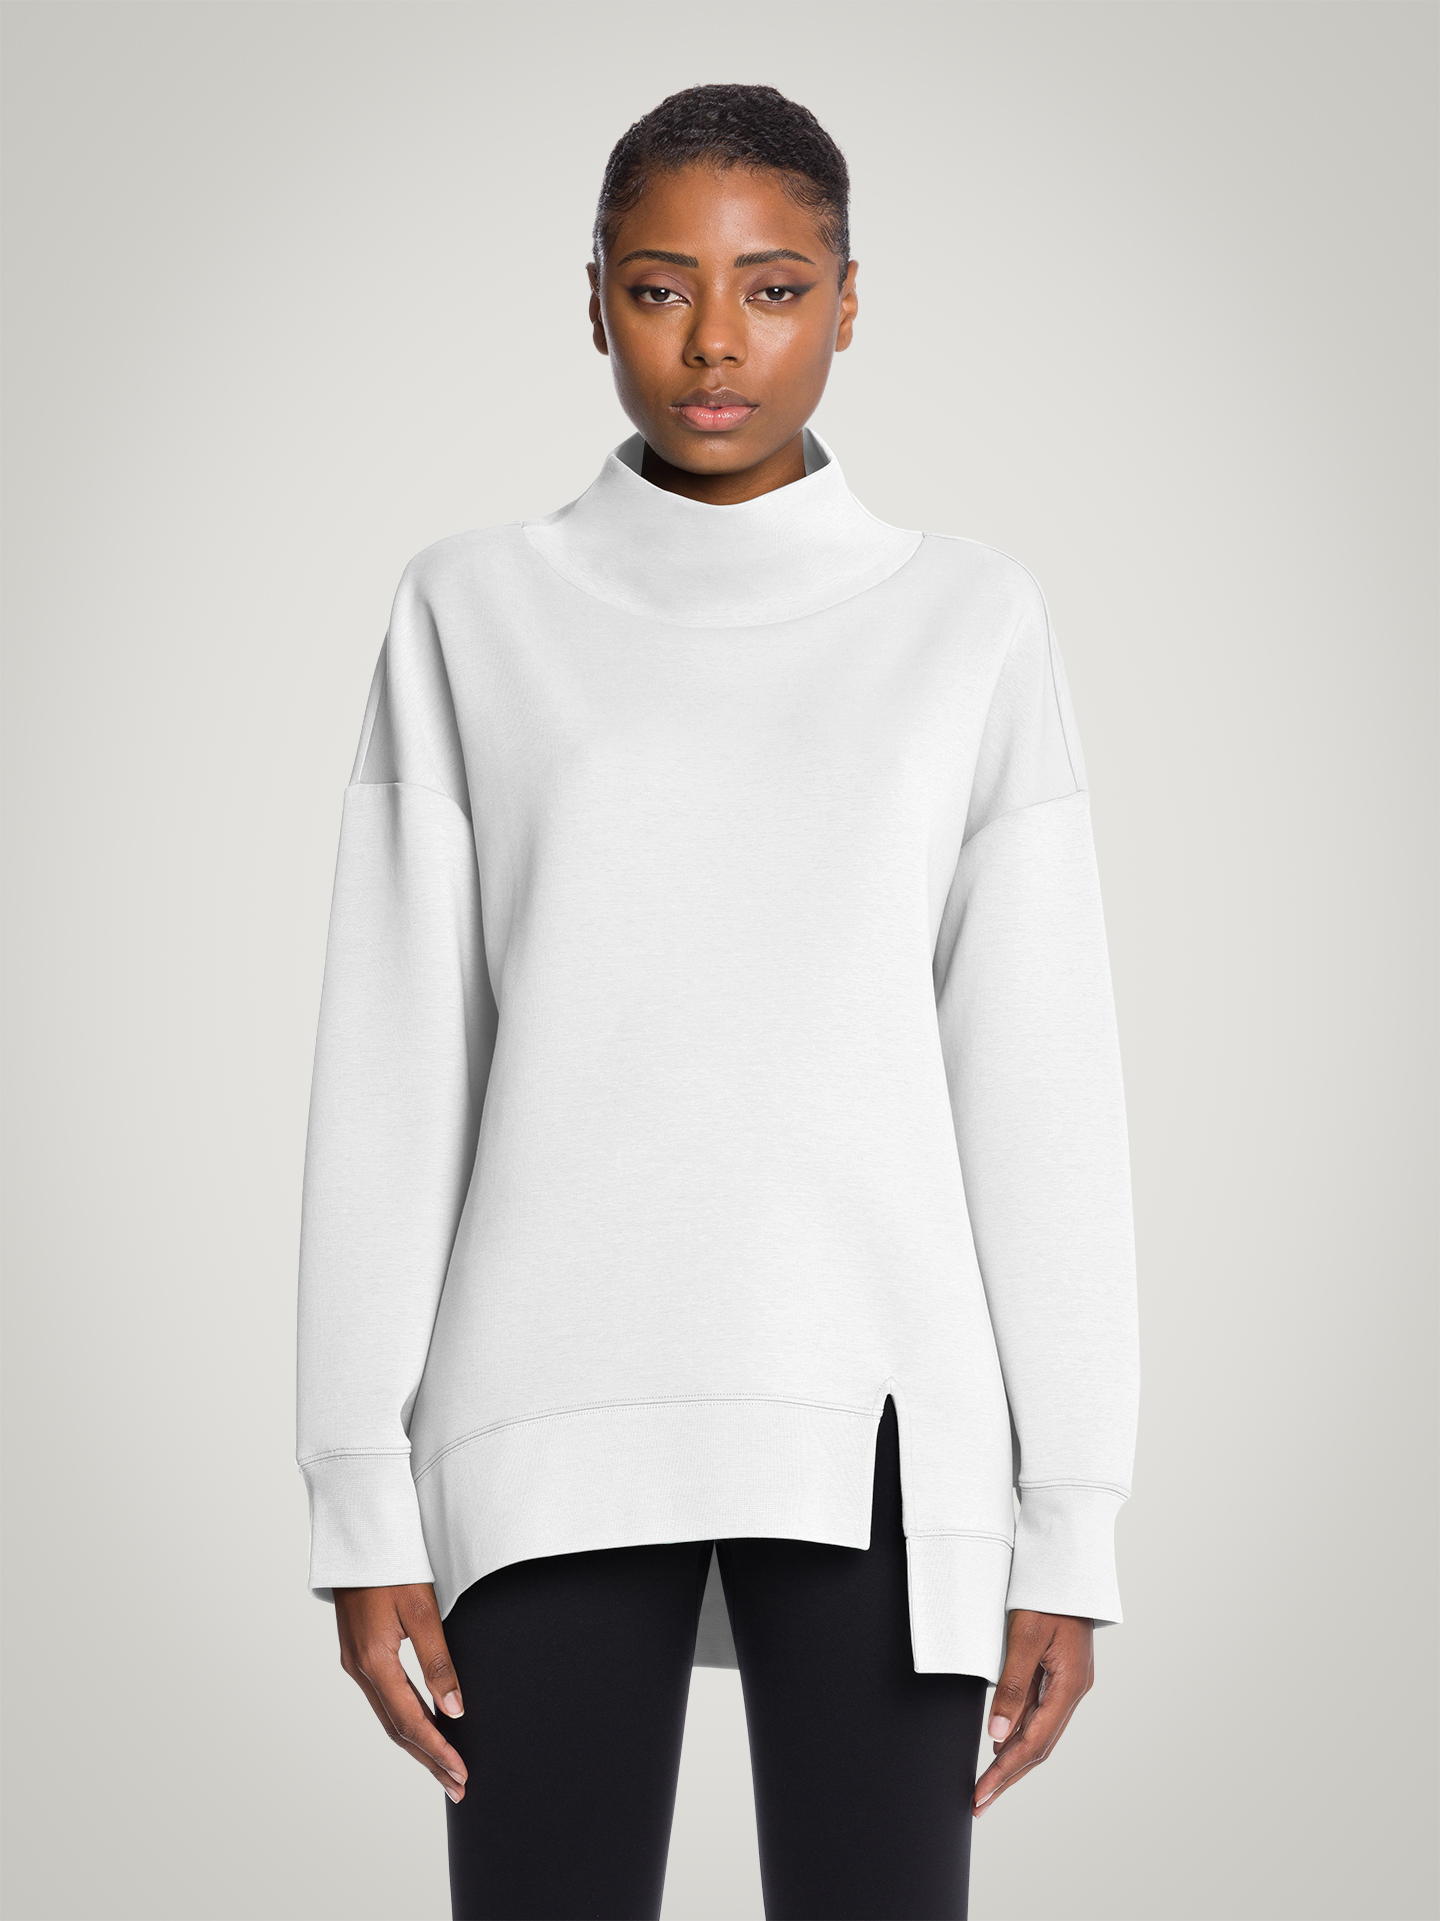 Wolford - Sweater Top Long Sleeves, Frau, white, Größe: L günstig online kaufen